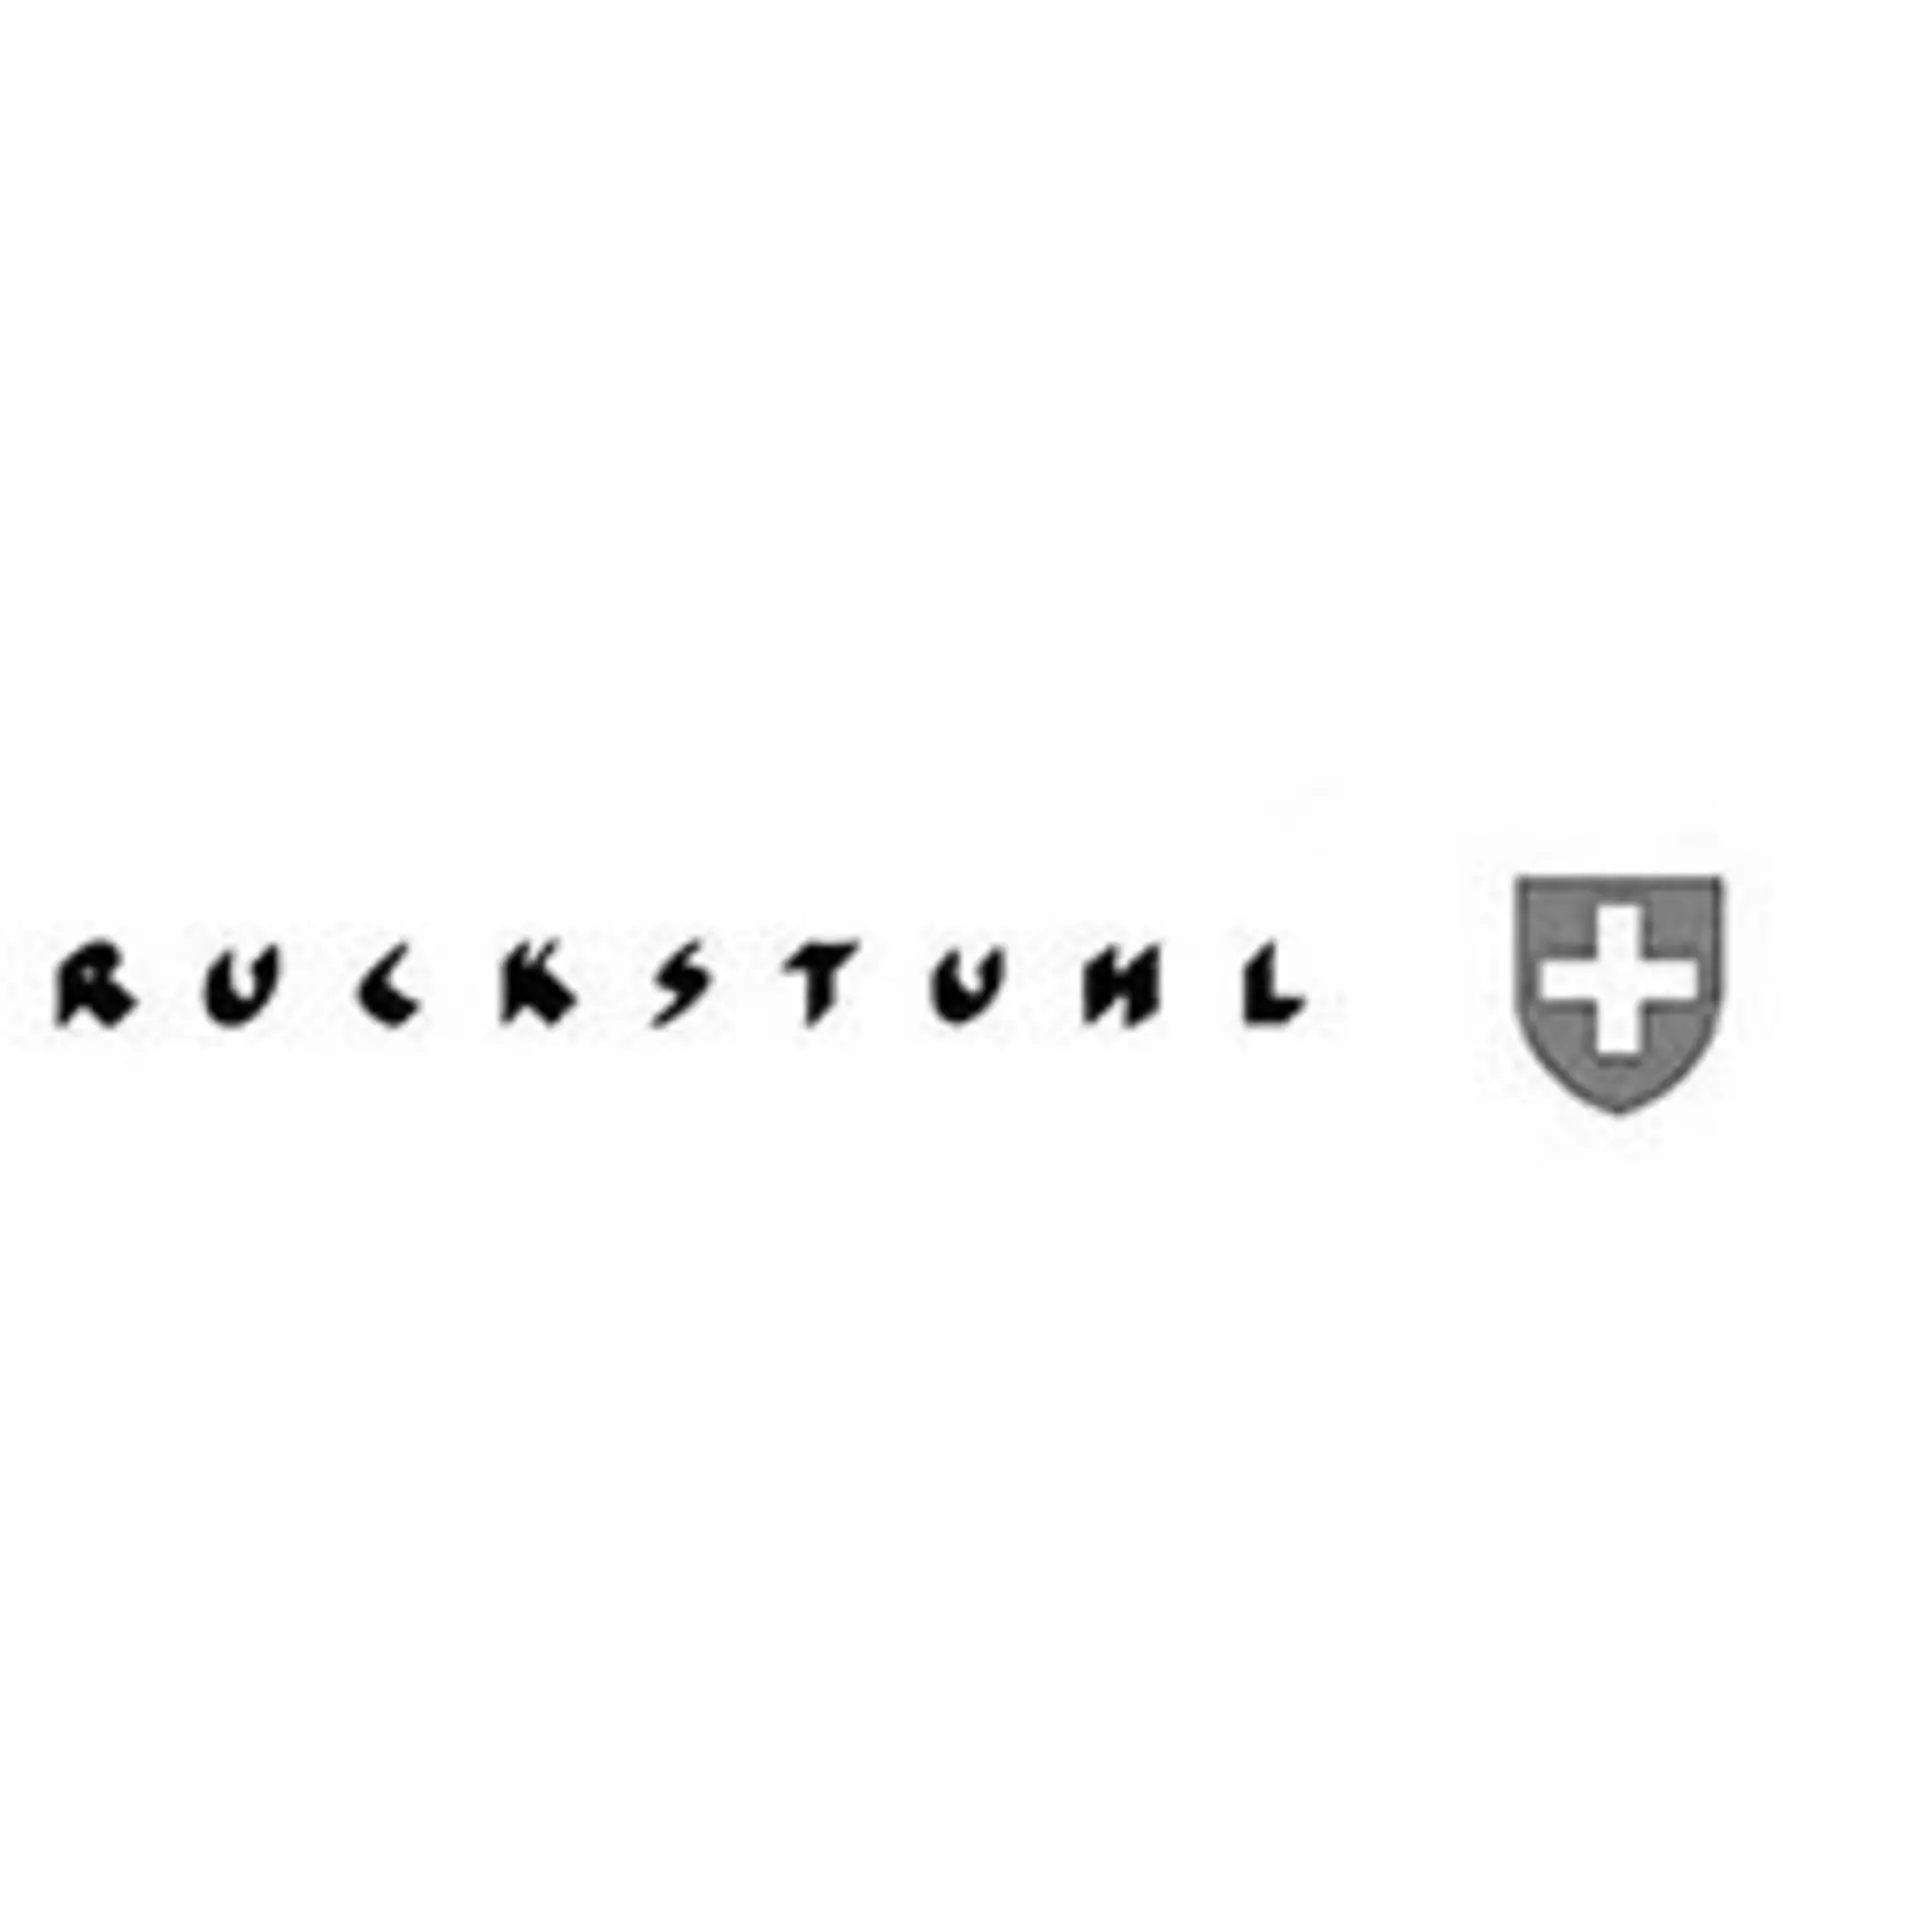 Logo RUCKSTUHL